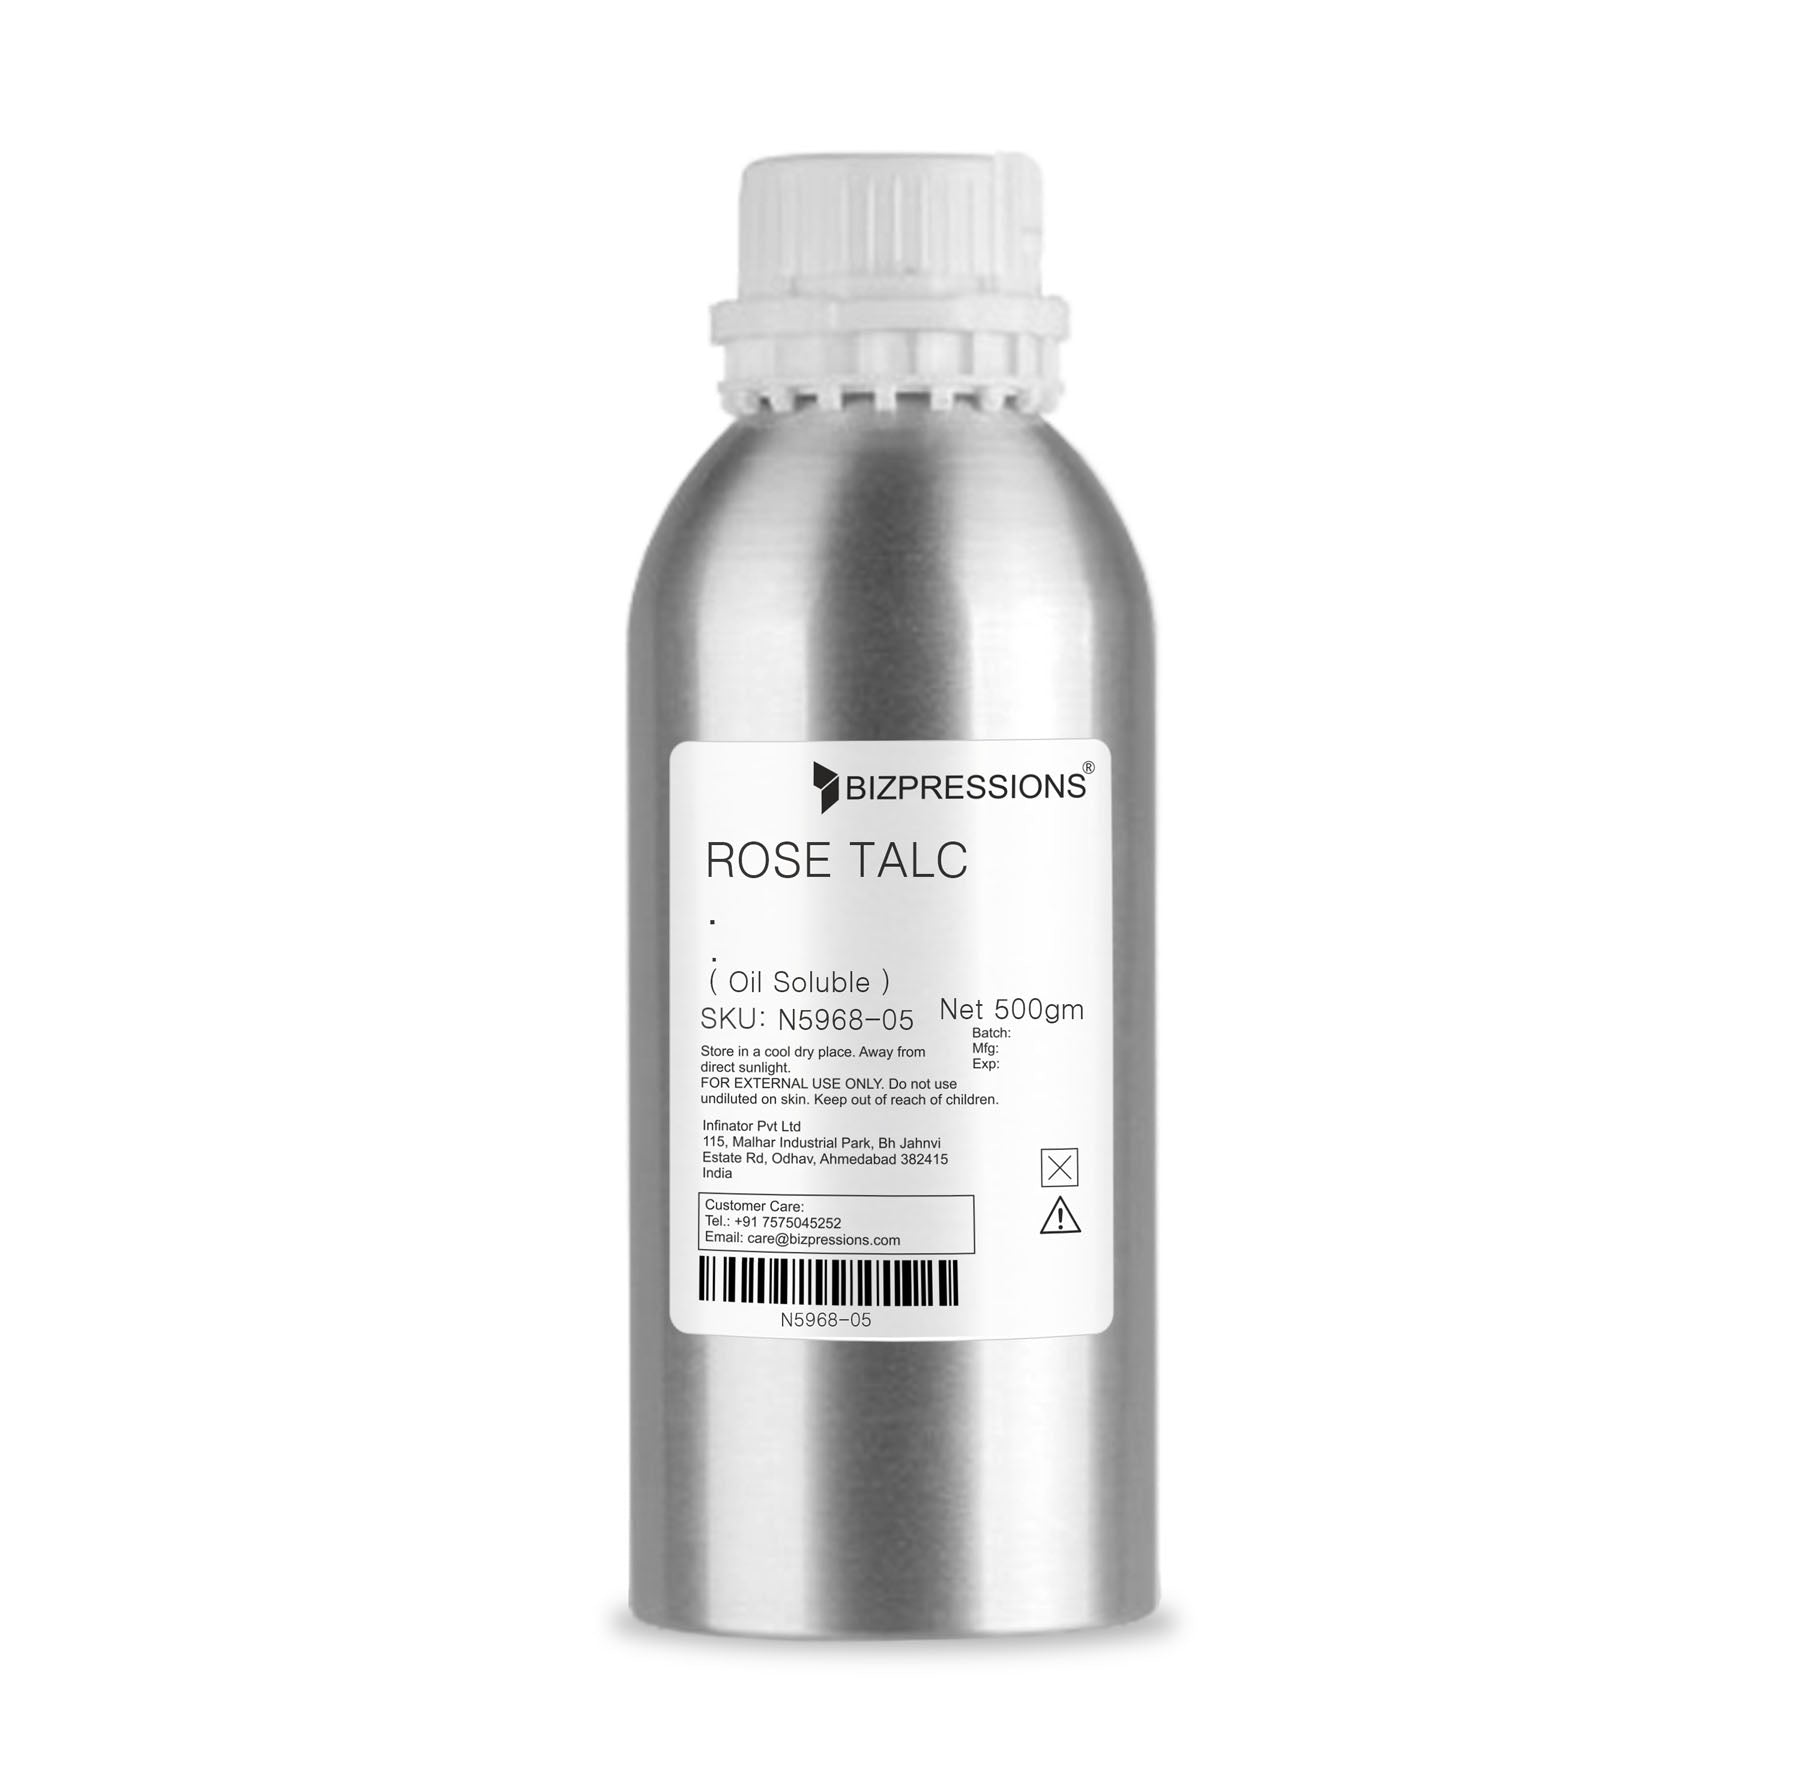 ROSE TALC - Fragrance ( Oil Soluble ) - 500 gm